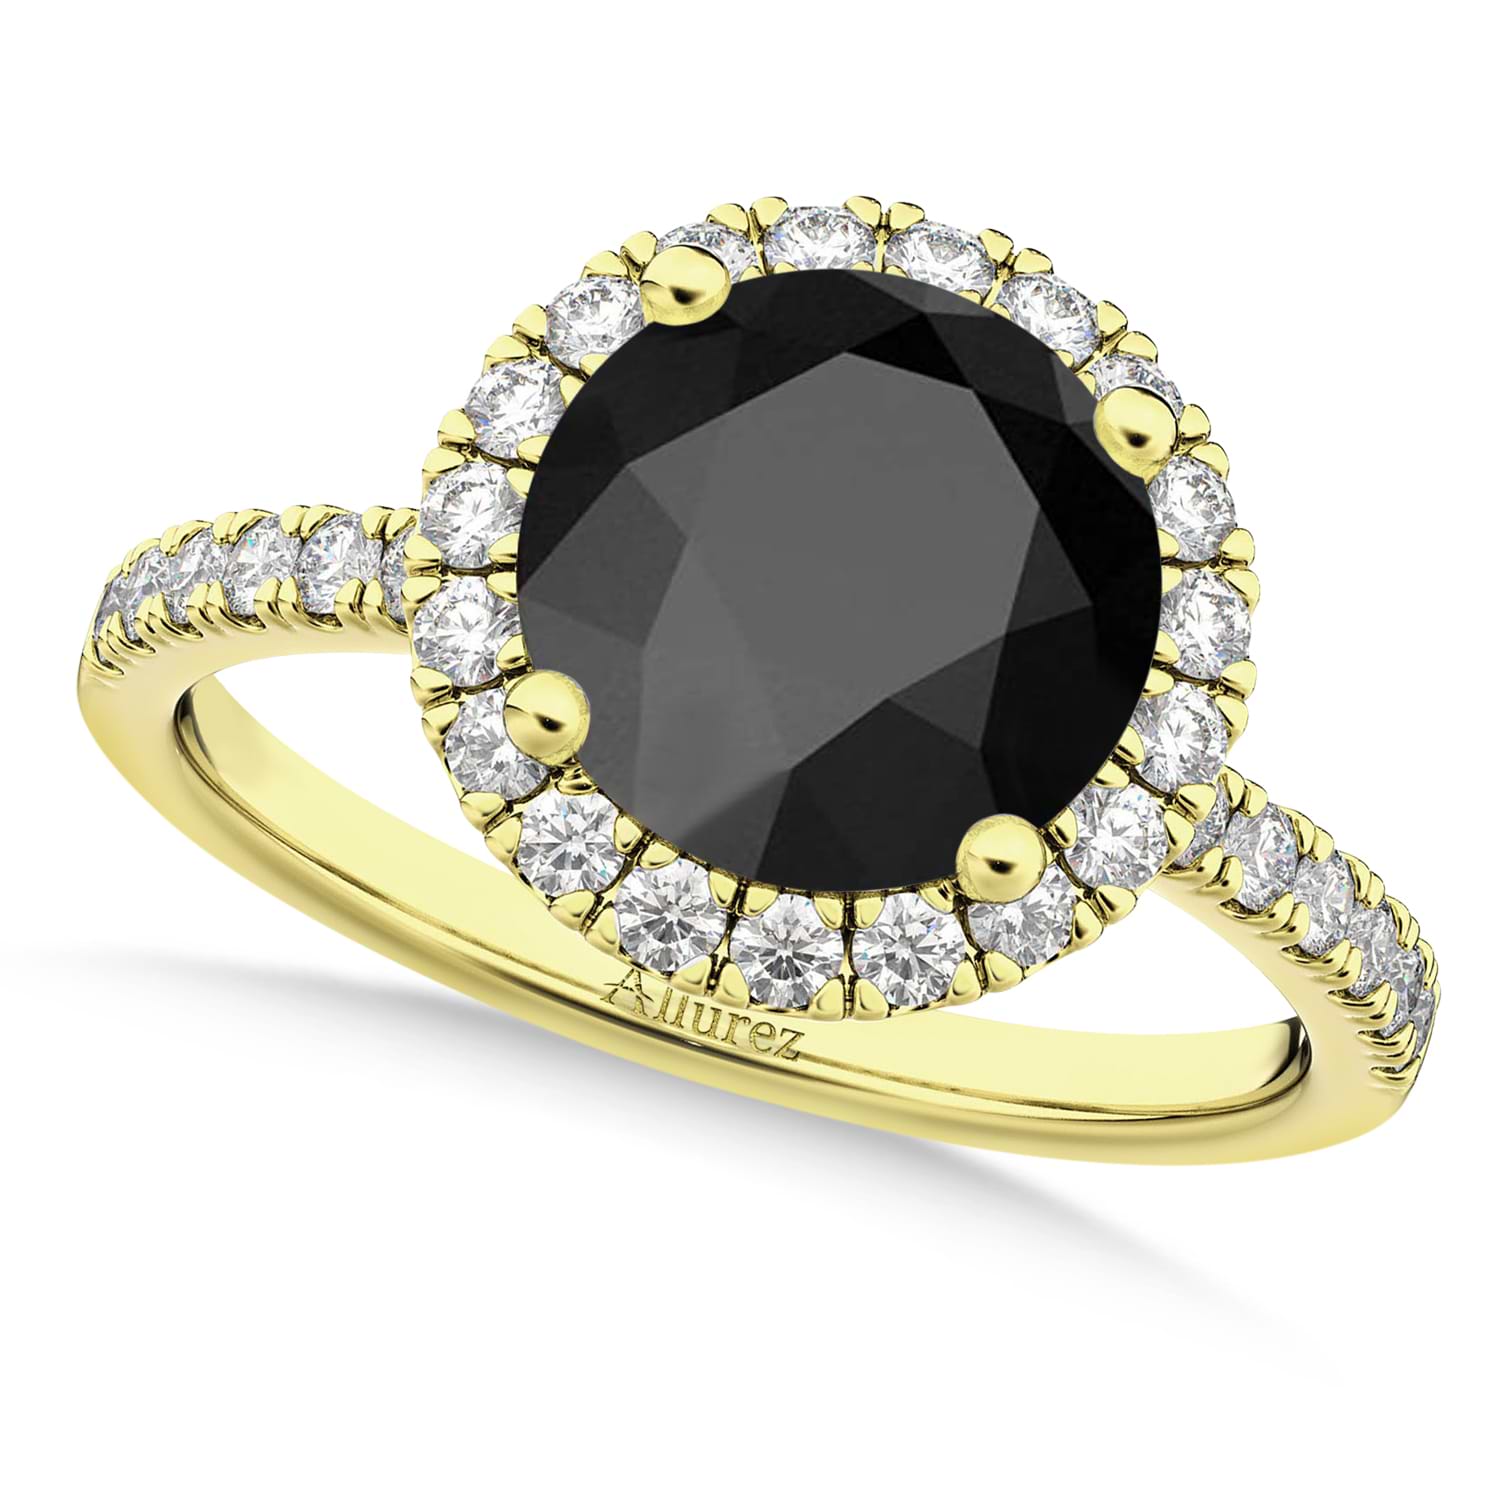 Halo Onyx & Diamond Engagement Ring 14K Yellow Gold 2.90ct